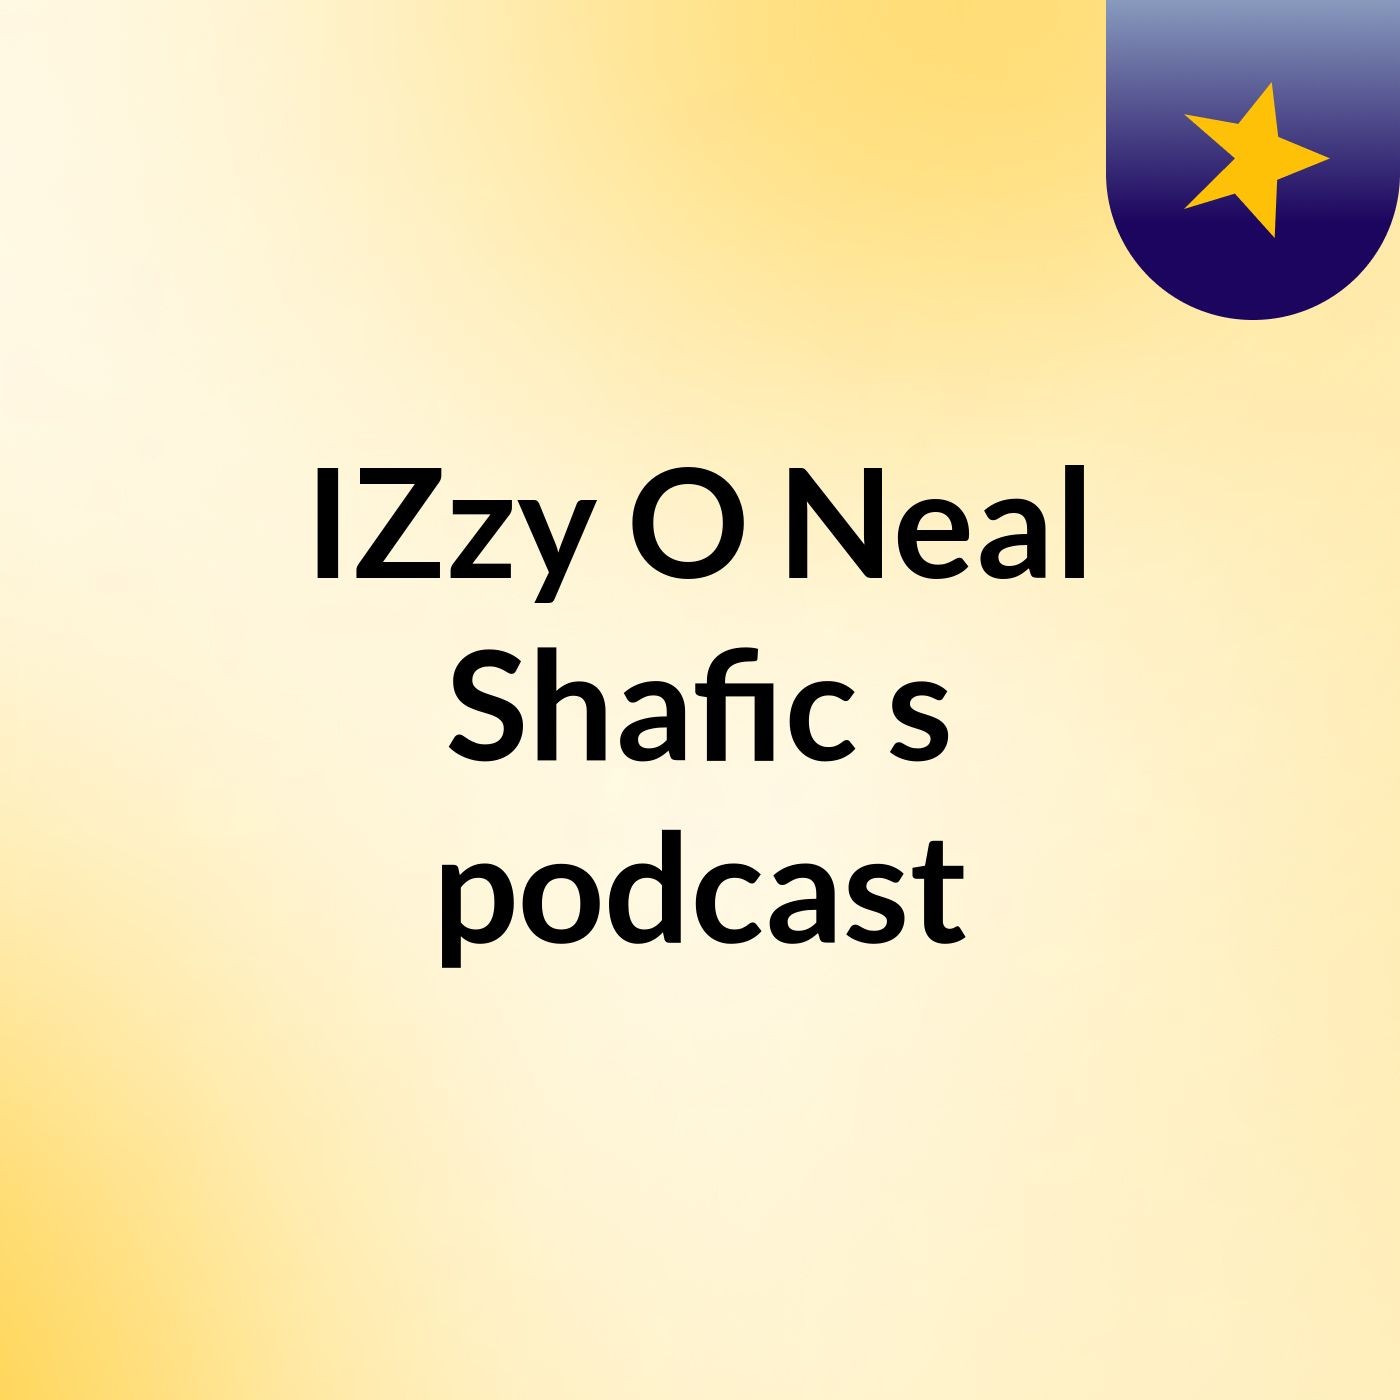 Jesus' name Episode 2 - IZzy O'Neal Shafic's podcast